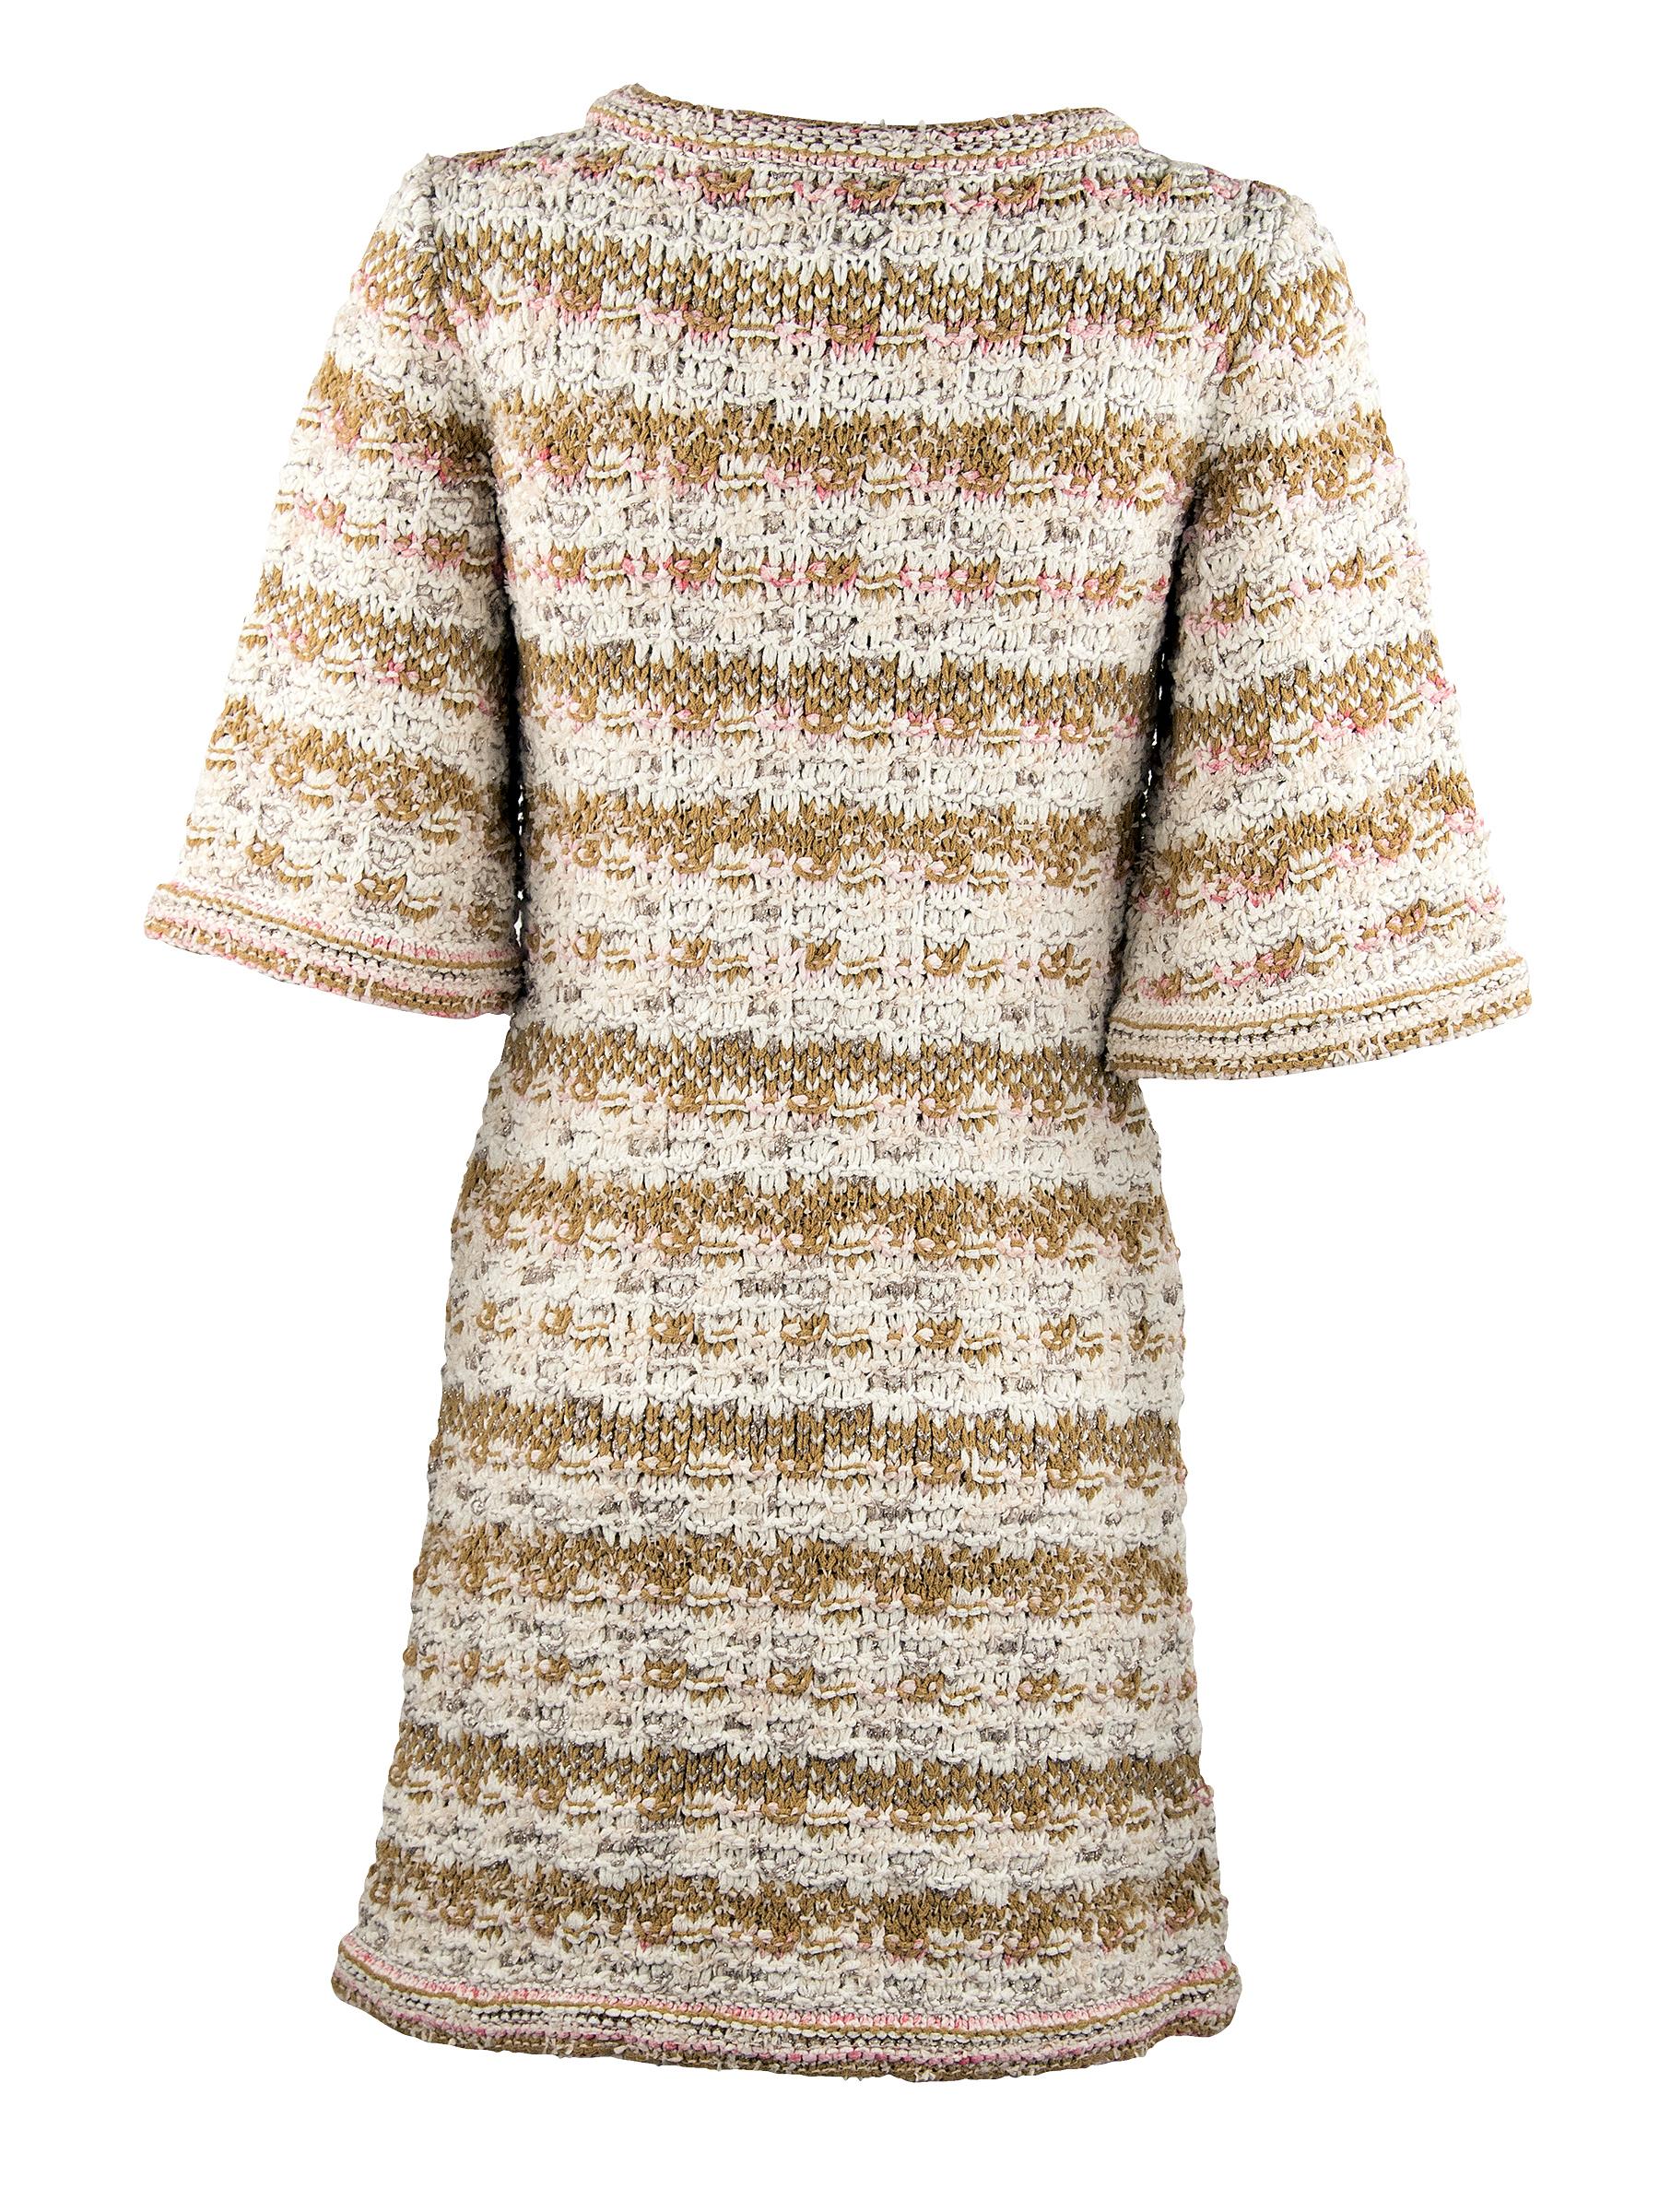 Beige Chanel Resort 2015 Multicolored Woven Shift Dress - Size FR 36 For Sale